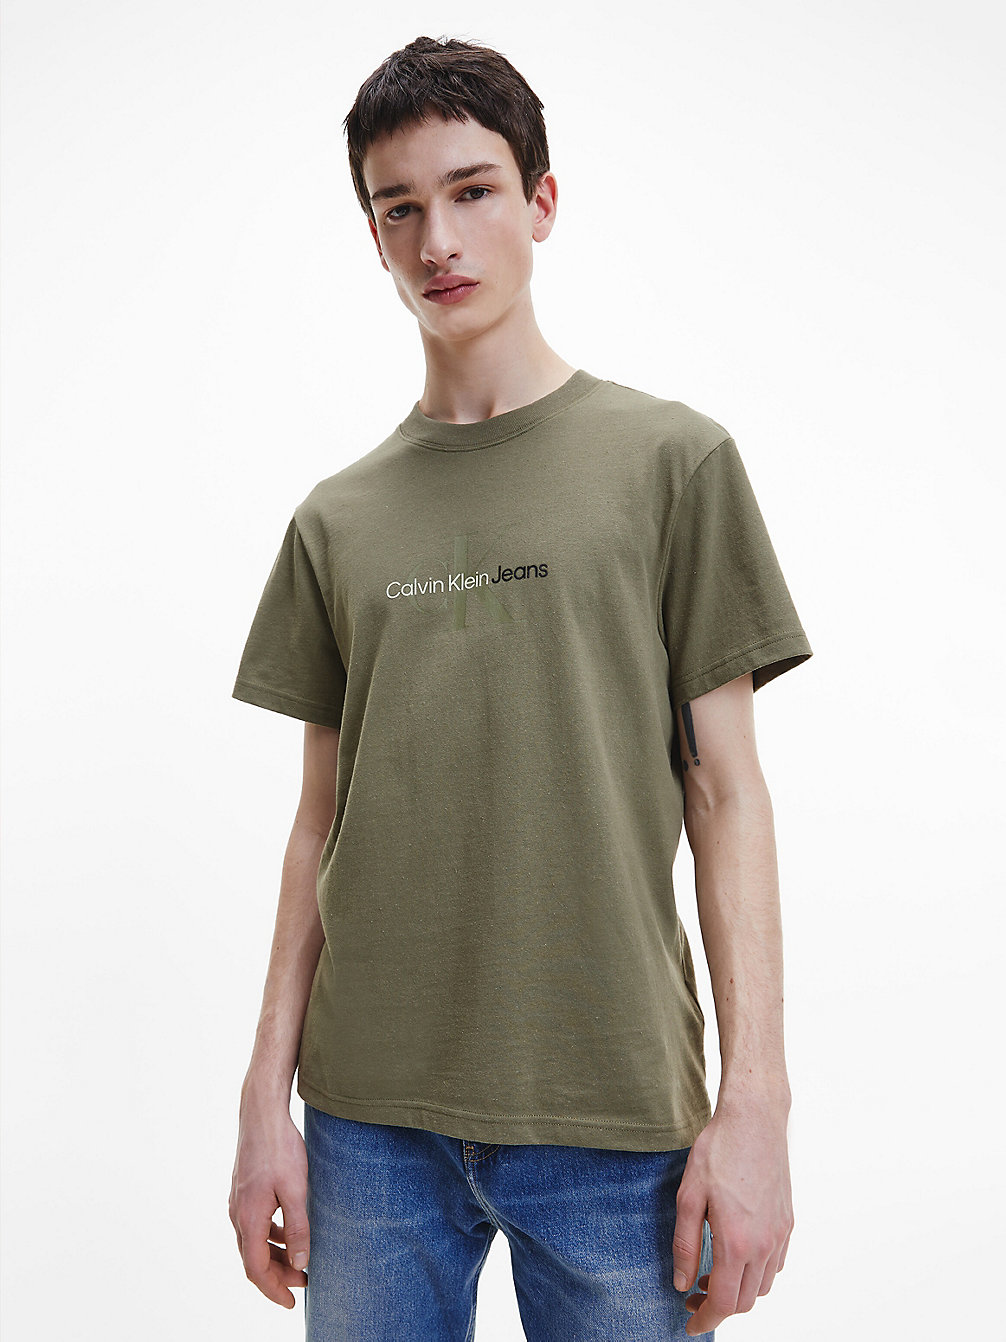 BURNT OLIVE Recycled Cotton Logo T-Shirt undefined men Calvin Klein